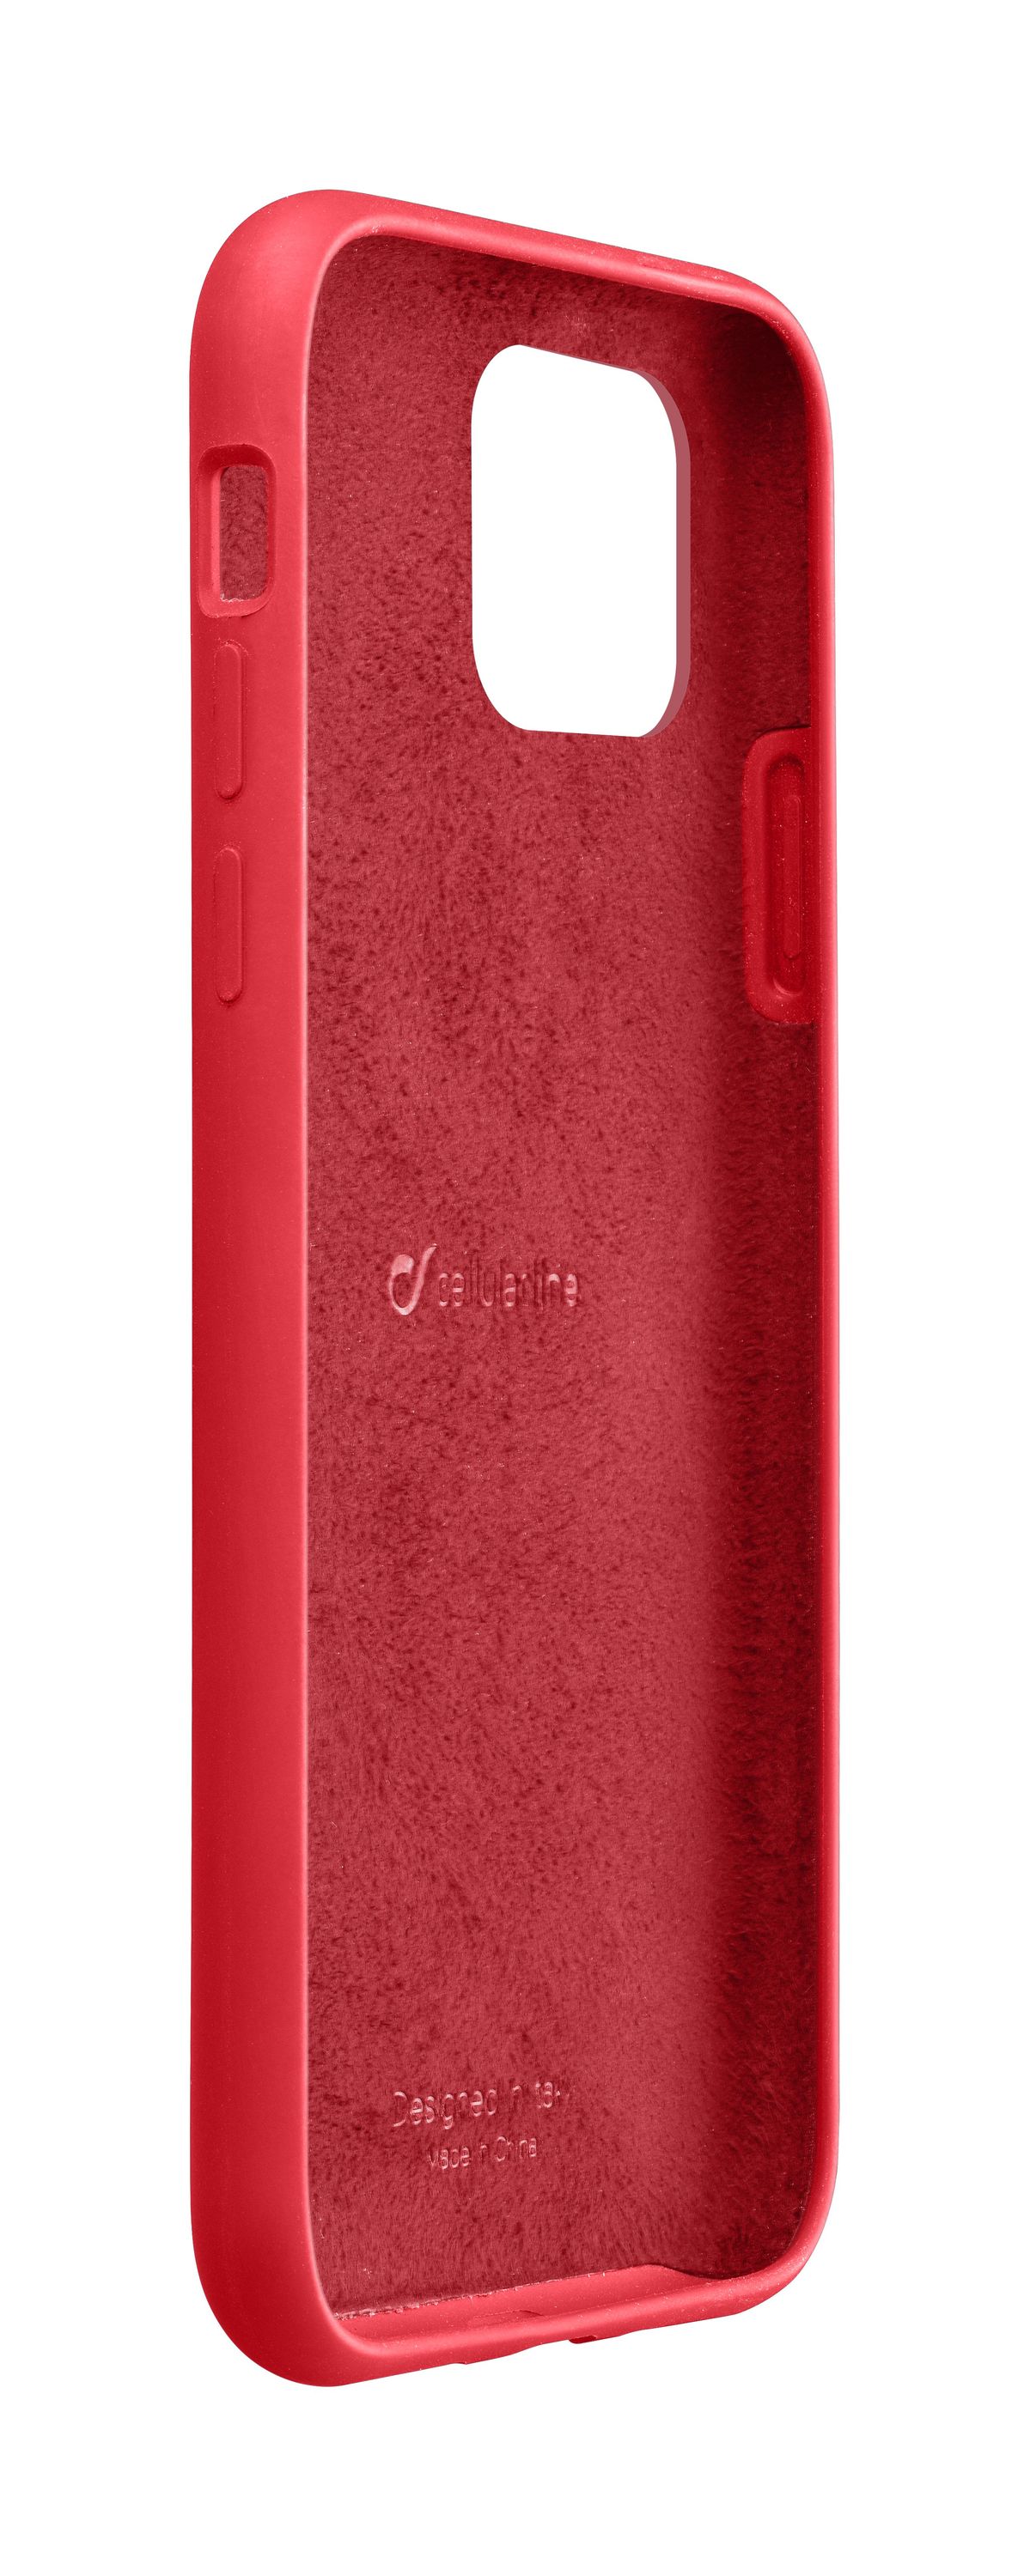 iPhone 11 Pro, hoesje sensation, rood